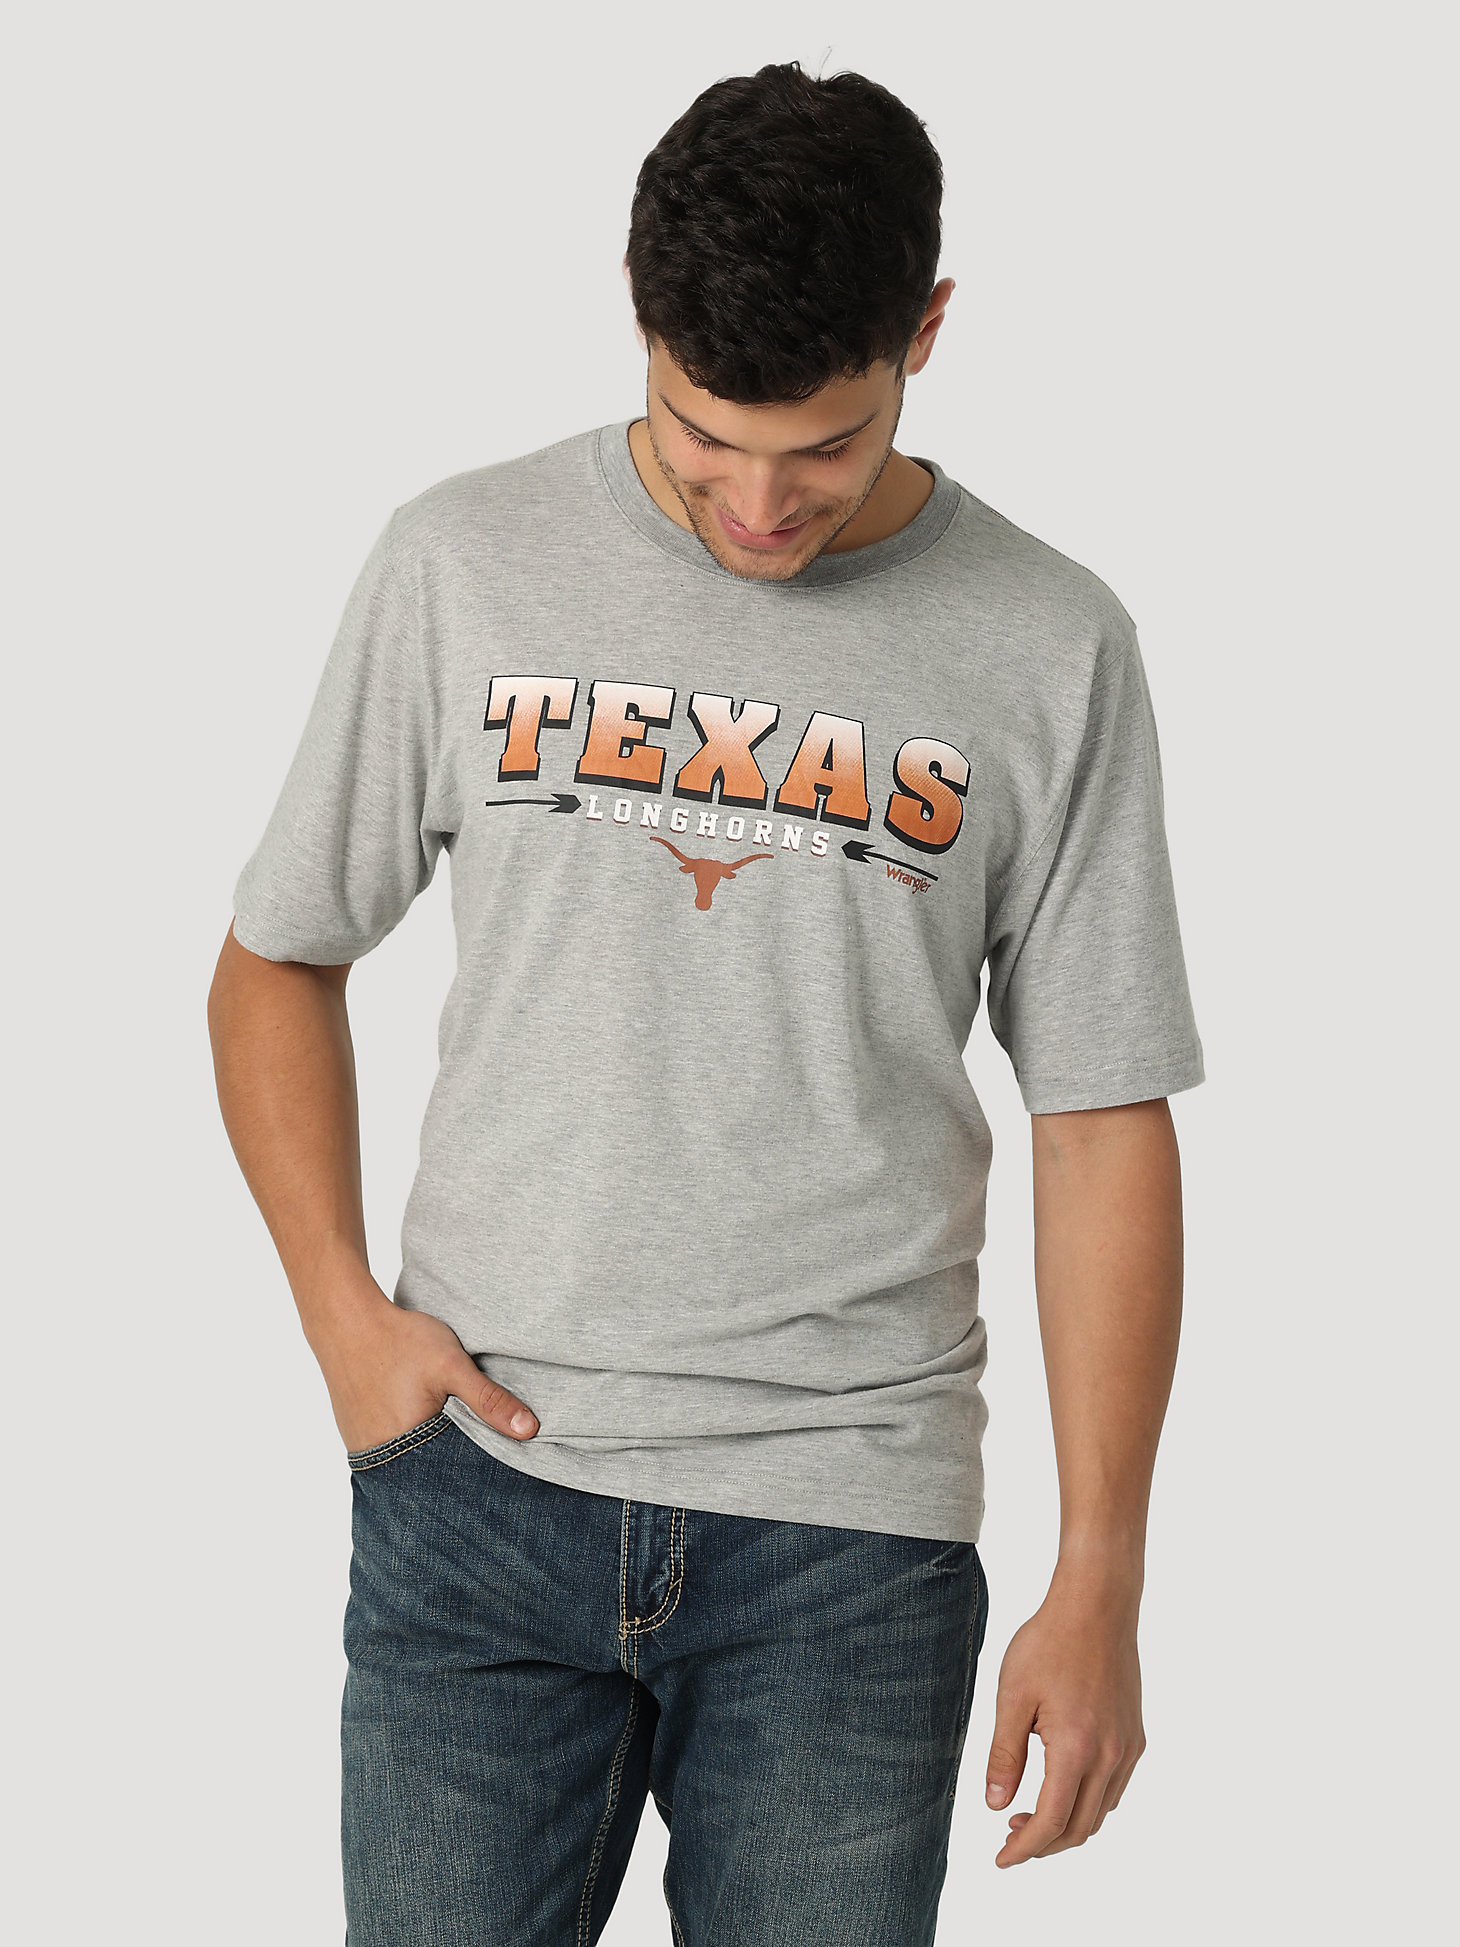 Wrangler Collegiate Sunset Printed Short Sleeve T-Shirt in University of Texas main view